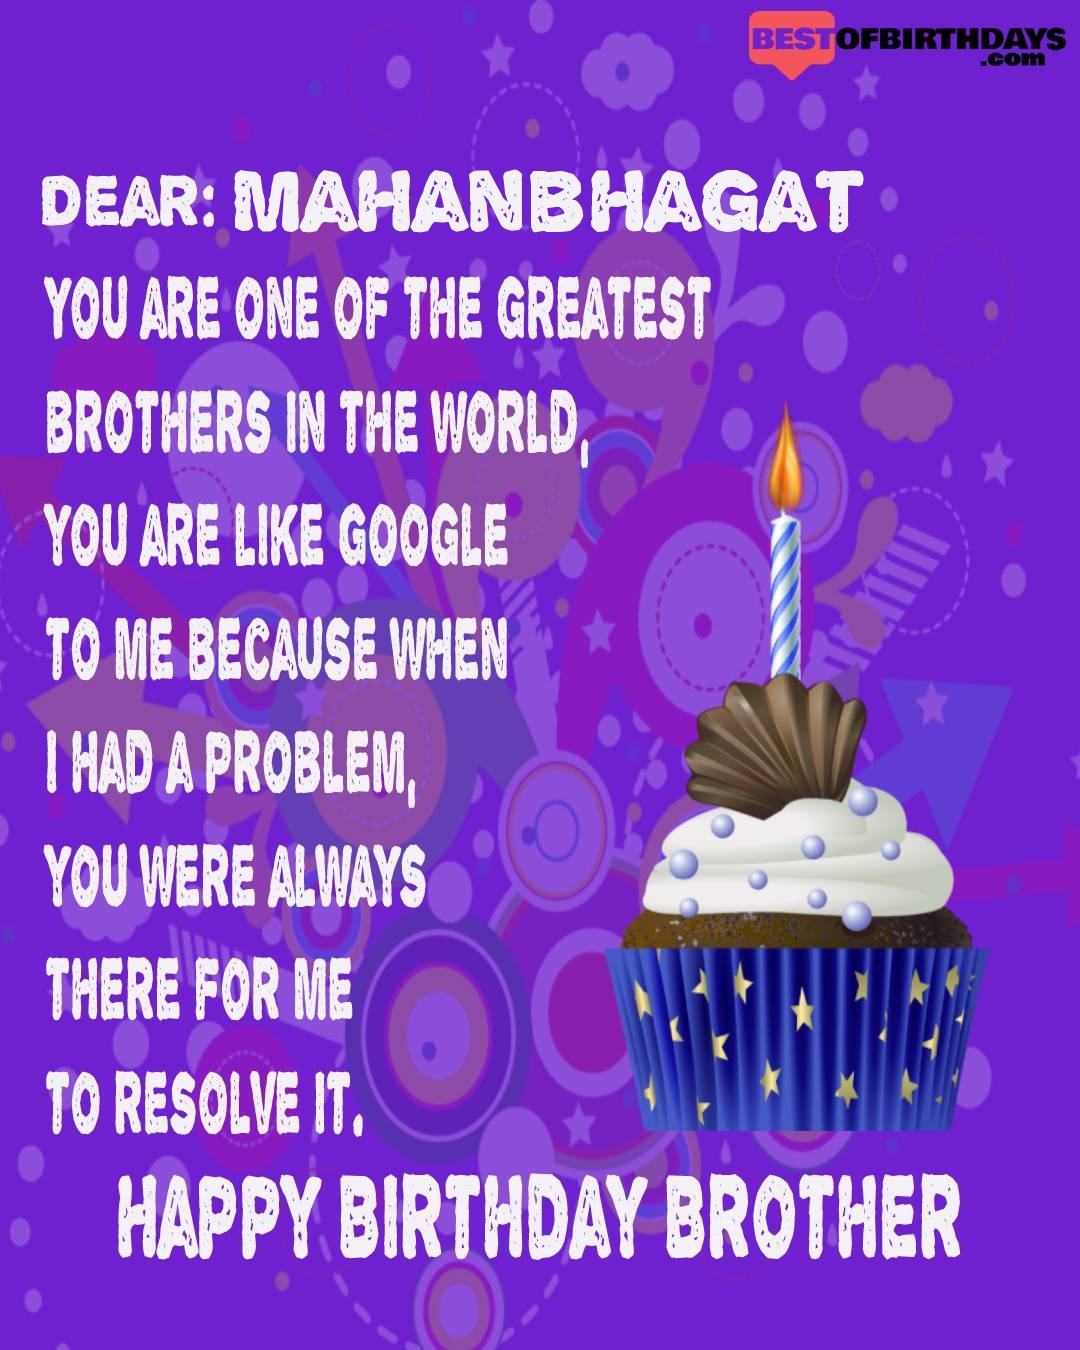 Happy birthday mahanbhagat bhai brother bro